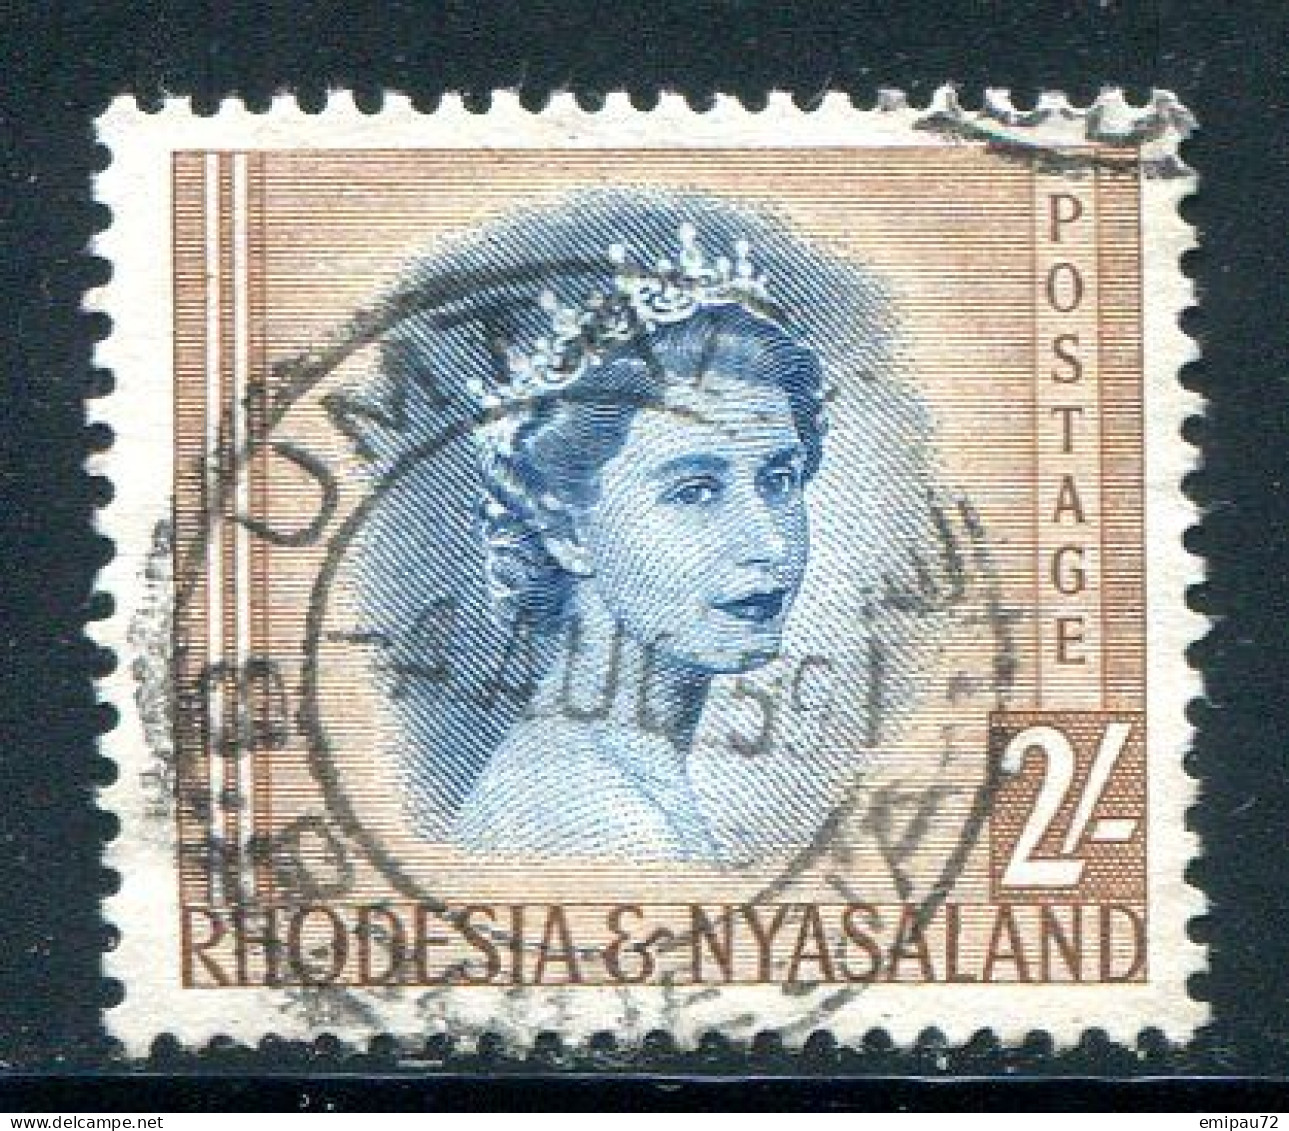 RHODESIE ET NYASALAND- Y&T N°11- Oblitéré - Rhodésie & Nyasaland (1954-1963)